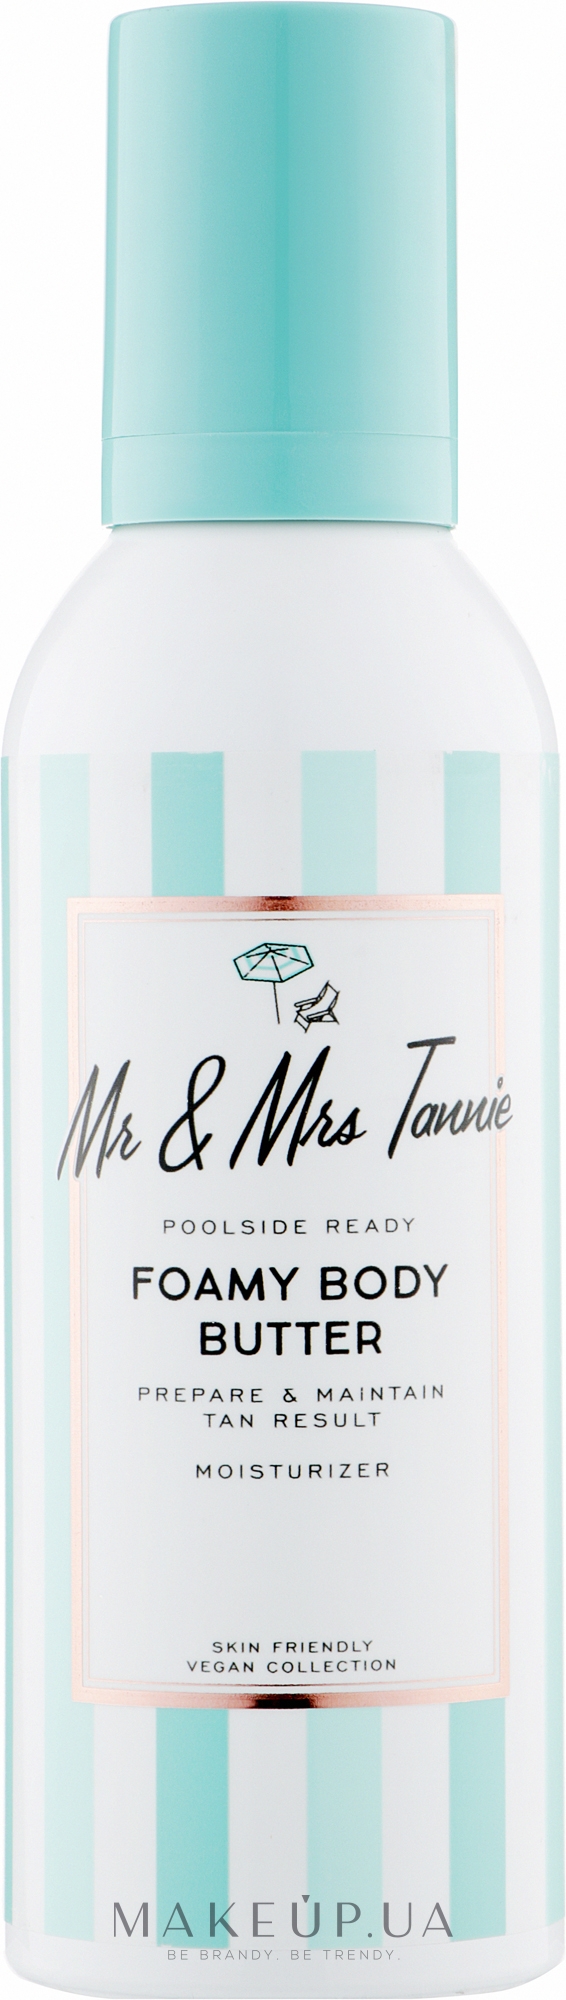 Мусс-масло для тела для продлевания загара - Mr & Mrs Tannie Foamy Body Butter — фото 200ml